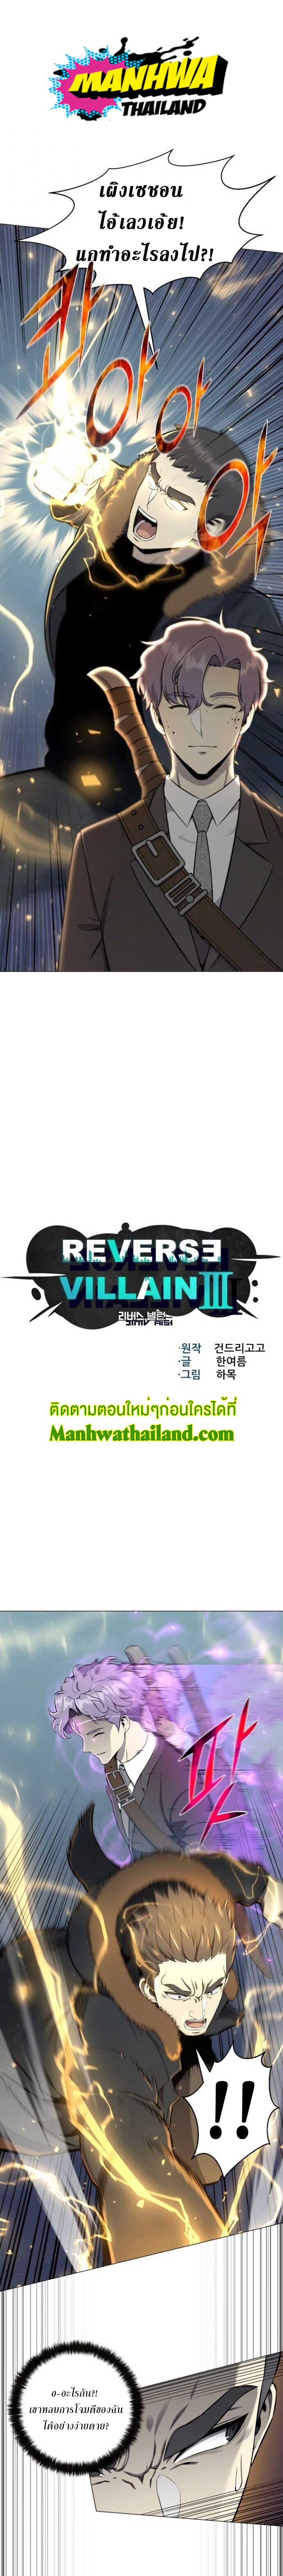 Reverse-Villain--85-01.jpg